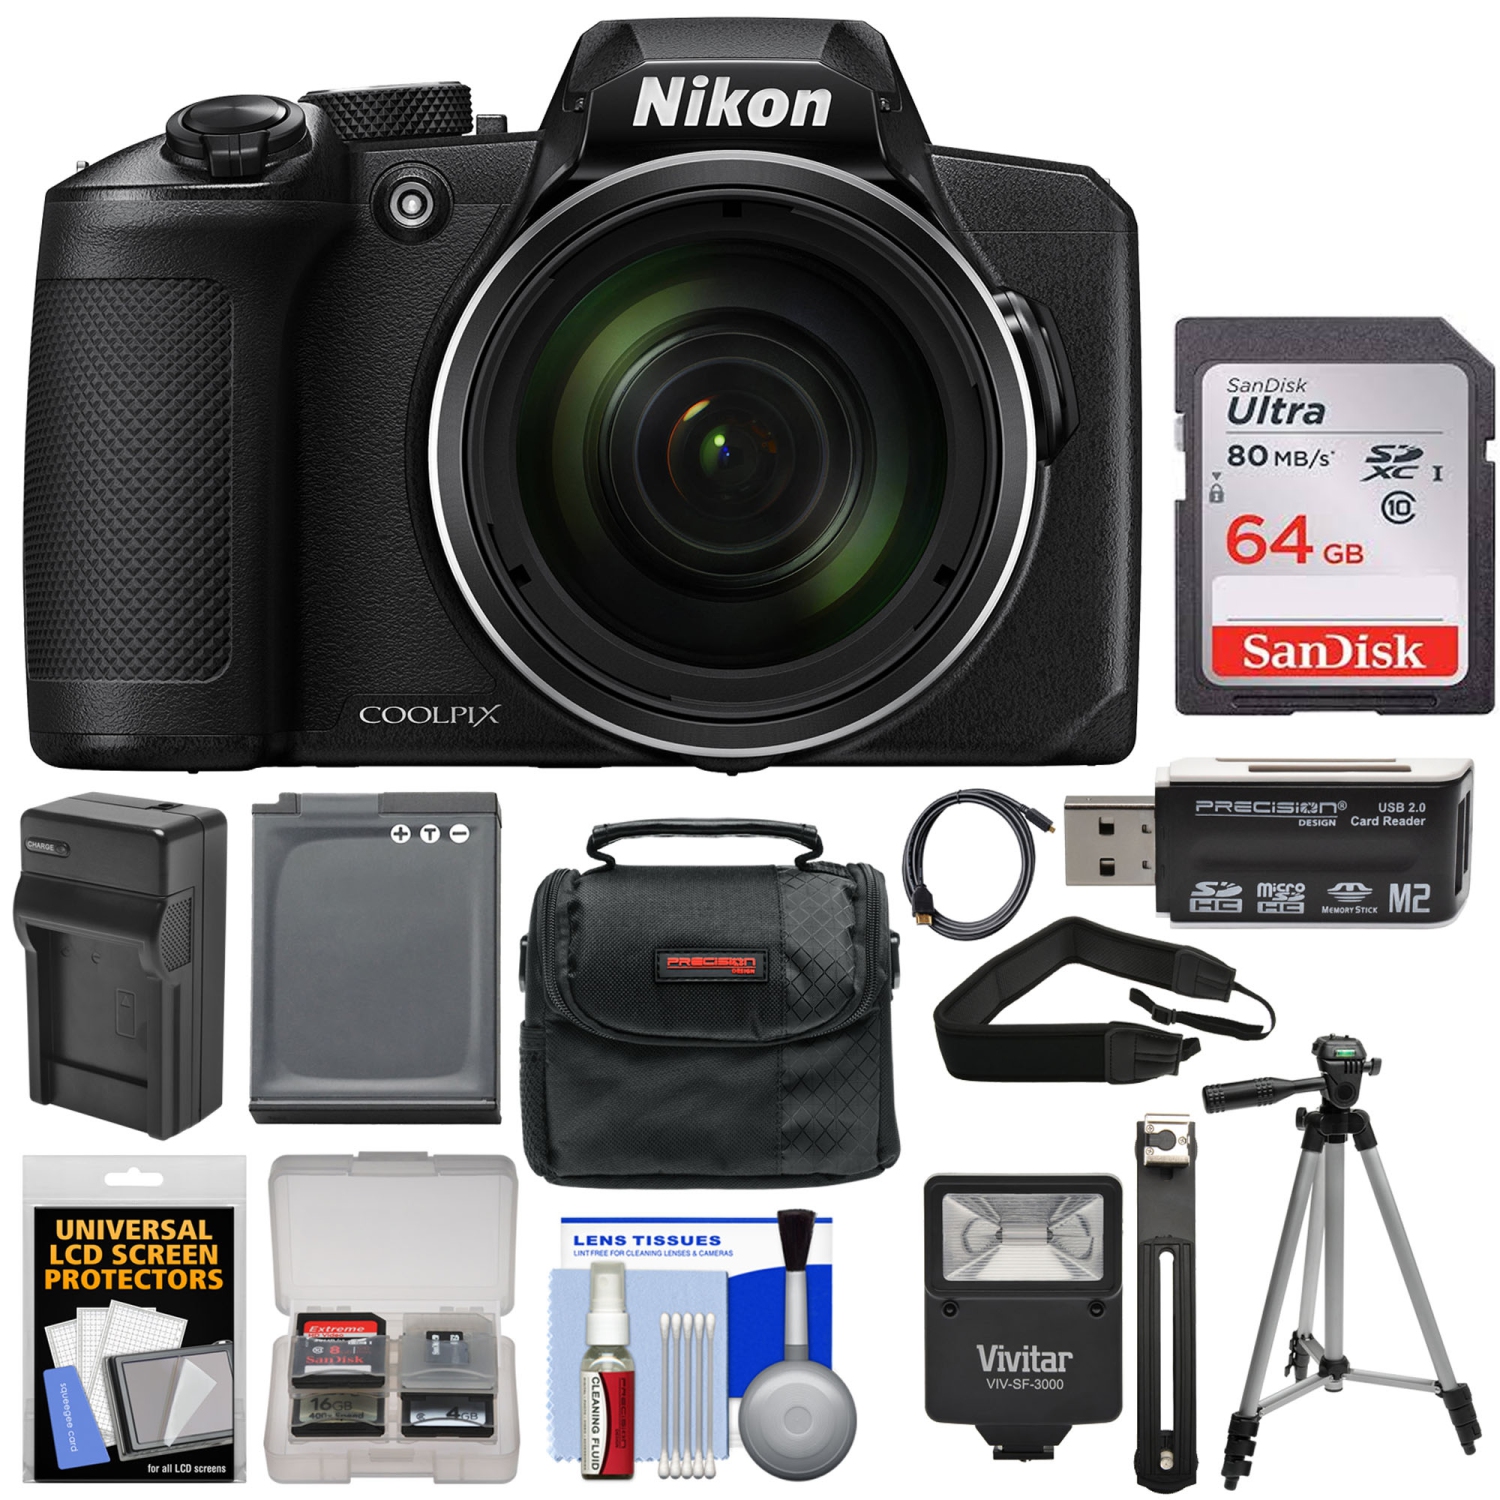 Nikon COOLPIX B600 Digital Camera (Black) with 64GB Card | Battery & Charger | Case | Flash | Tripod | Kit - US Version w/ Seller Warranty